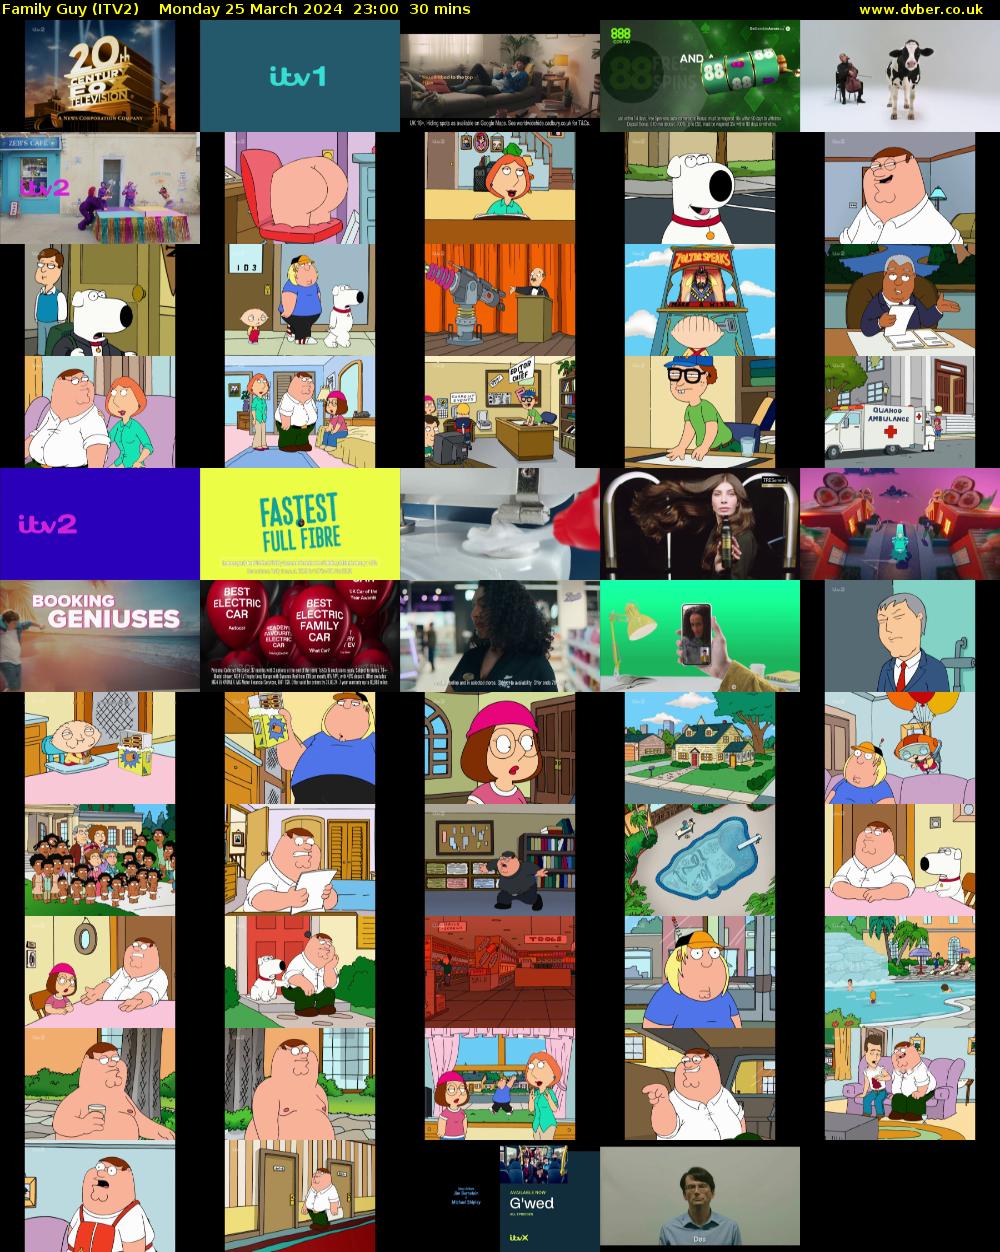 Family Guy (ITV2) Monday 25 March 2024 23:00 - 23:30